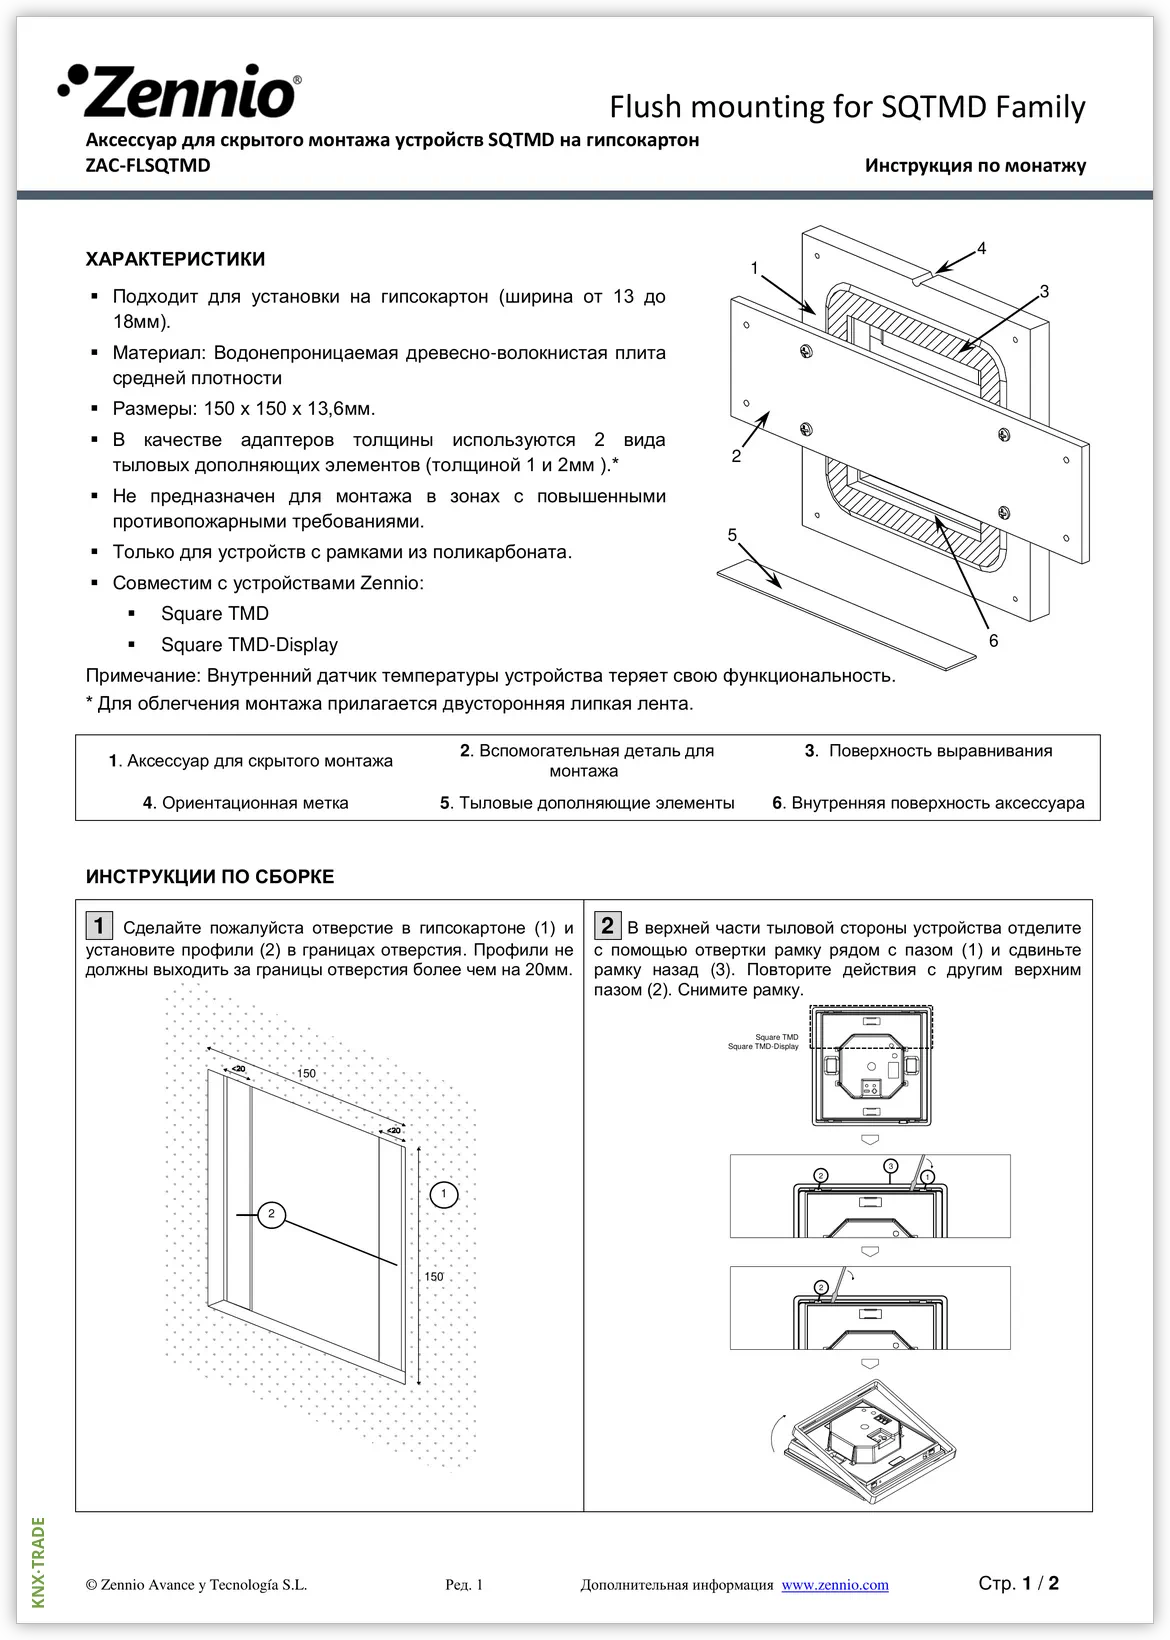 Datasheet (1) Zennio [ZAC-FLSQTMD] Flush mounting - Square TMD / Комплект для крепления вровень стены выключателей Square TMD